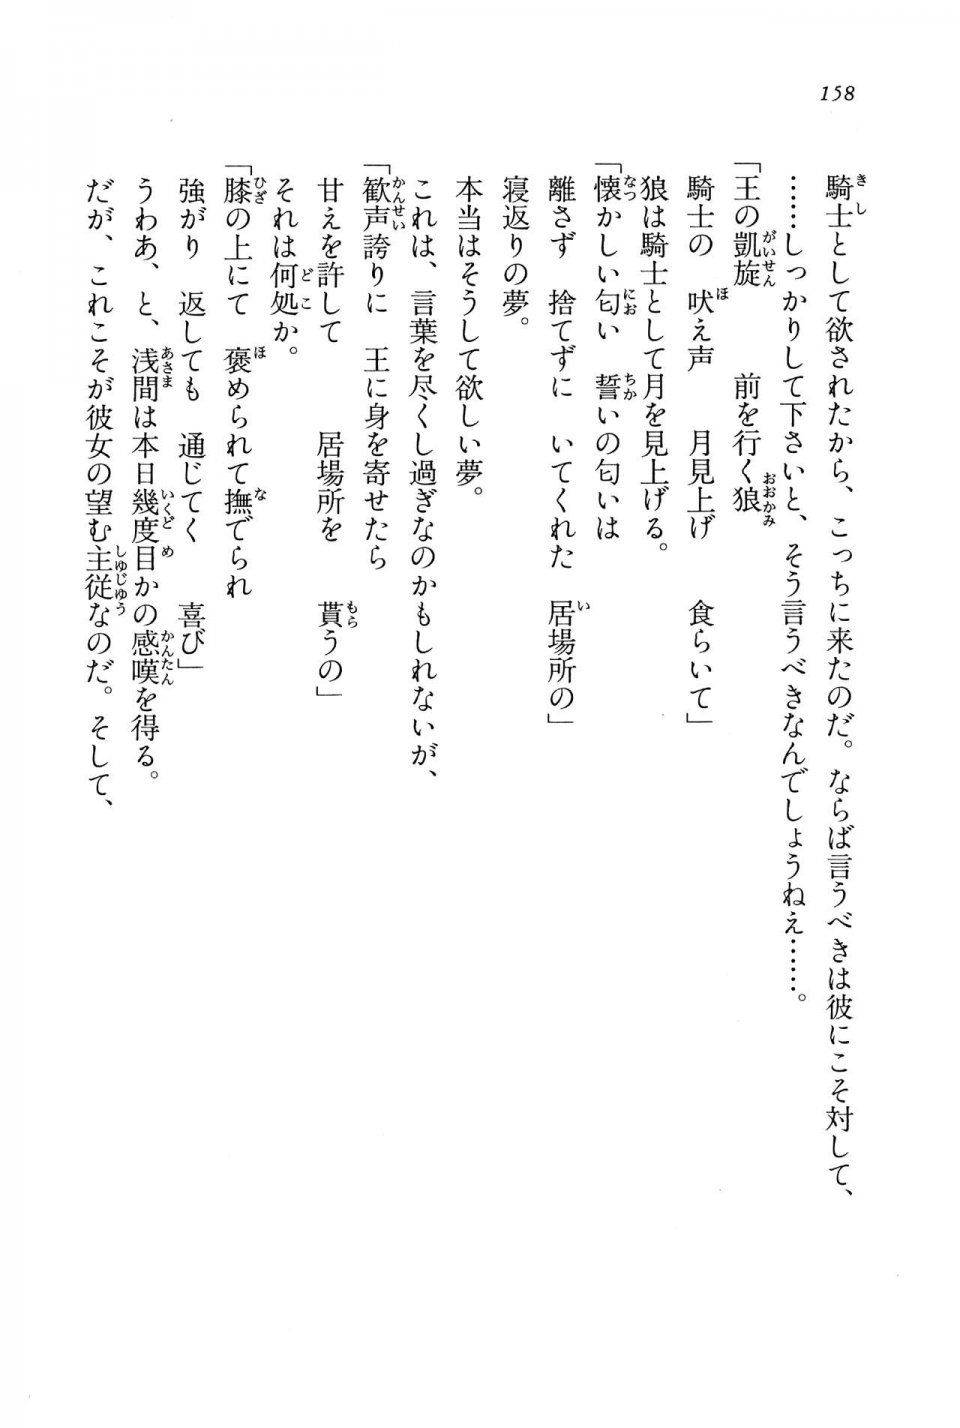 Kyoukai Senjou no Horizon BD Special Mininovel Vol 8(4B) - Photo #162